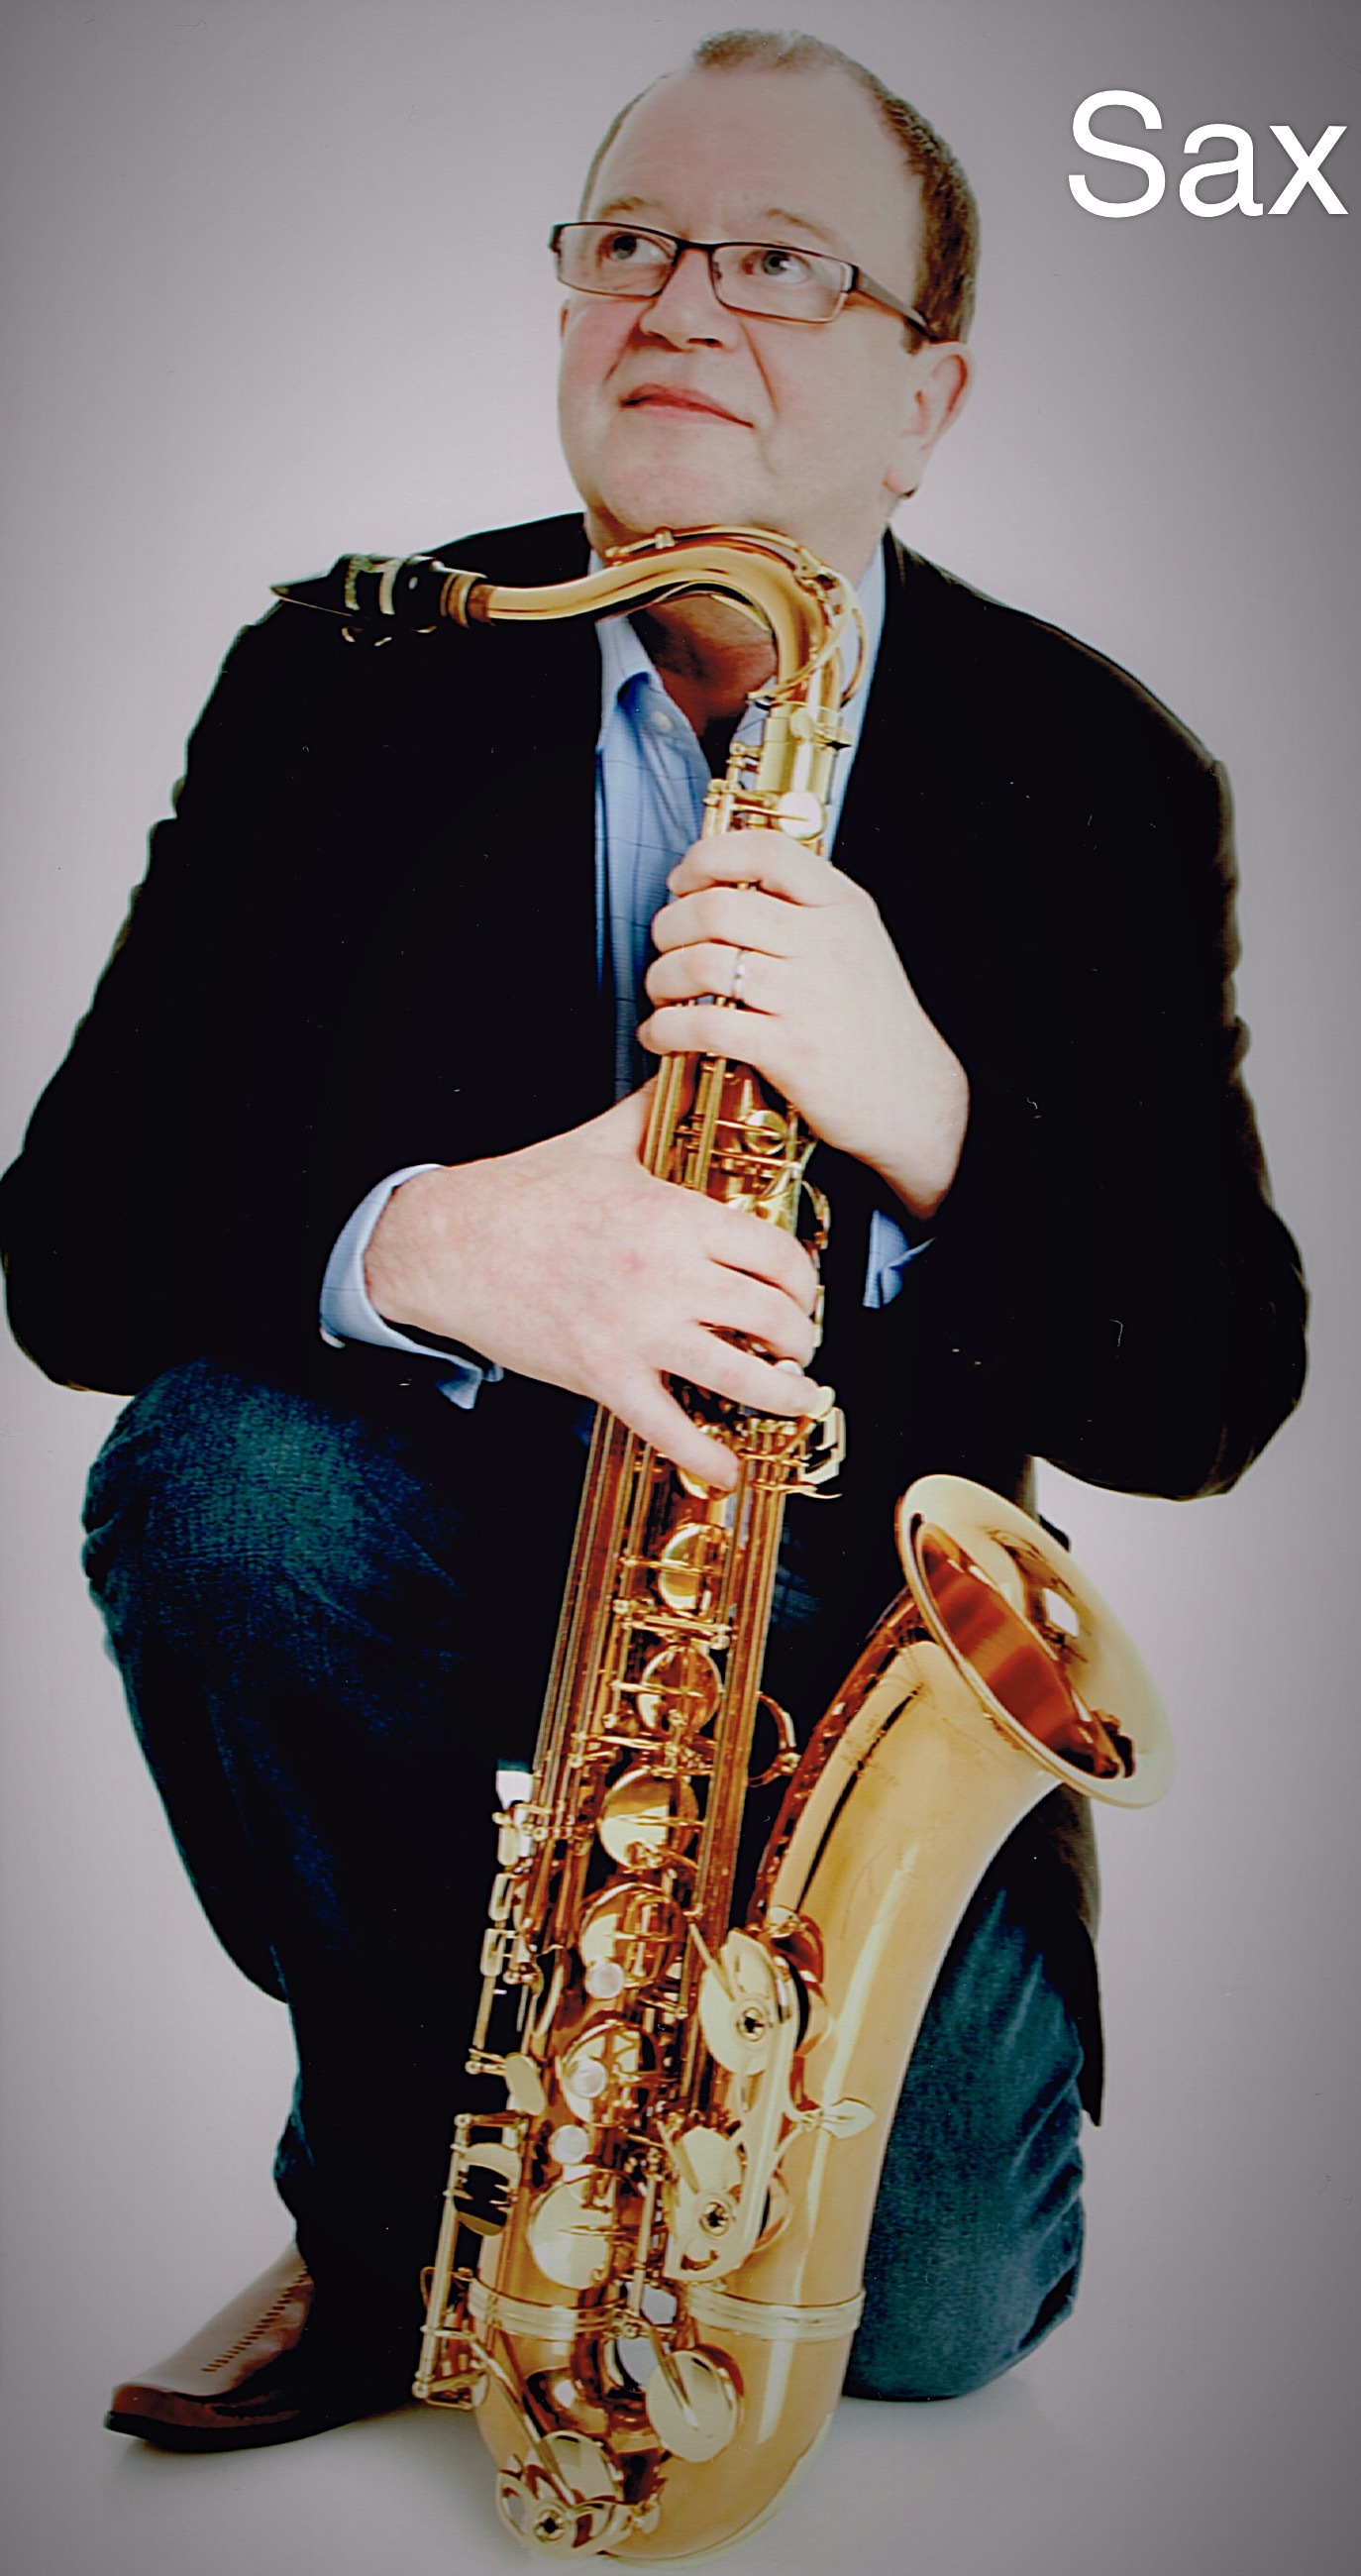 Saxophonist Ken in Prudhoe, Northumberland